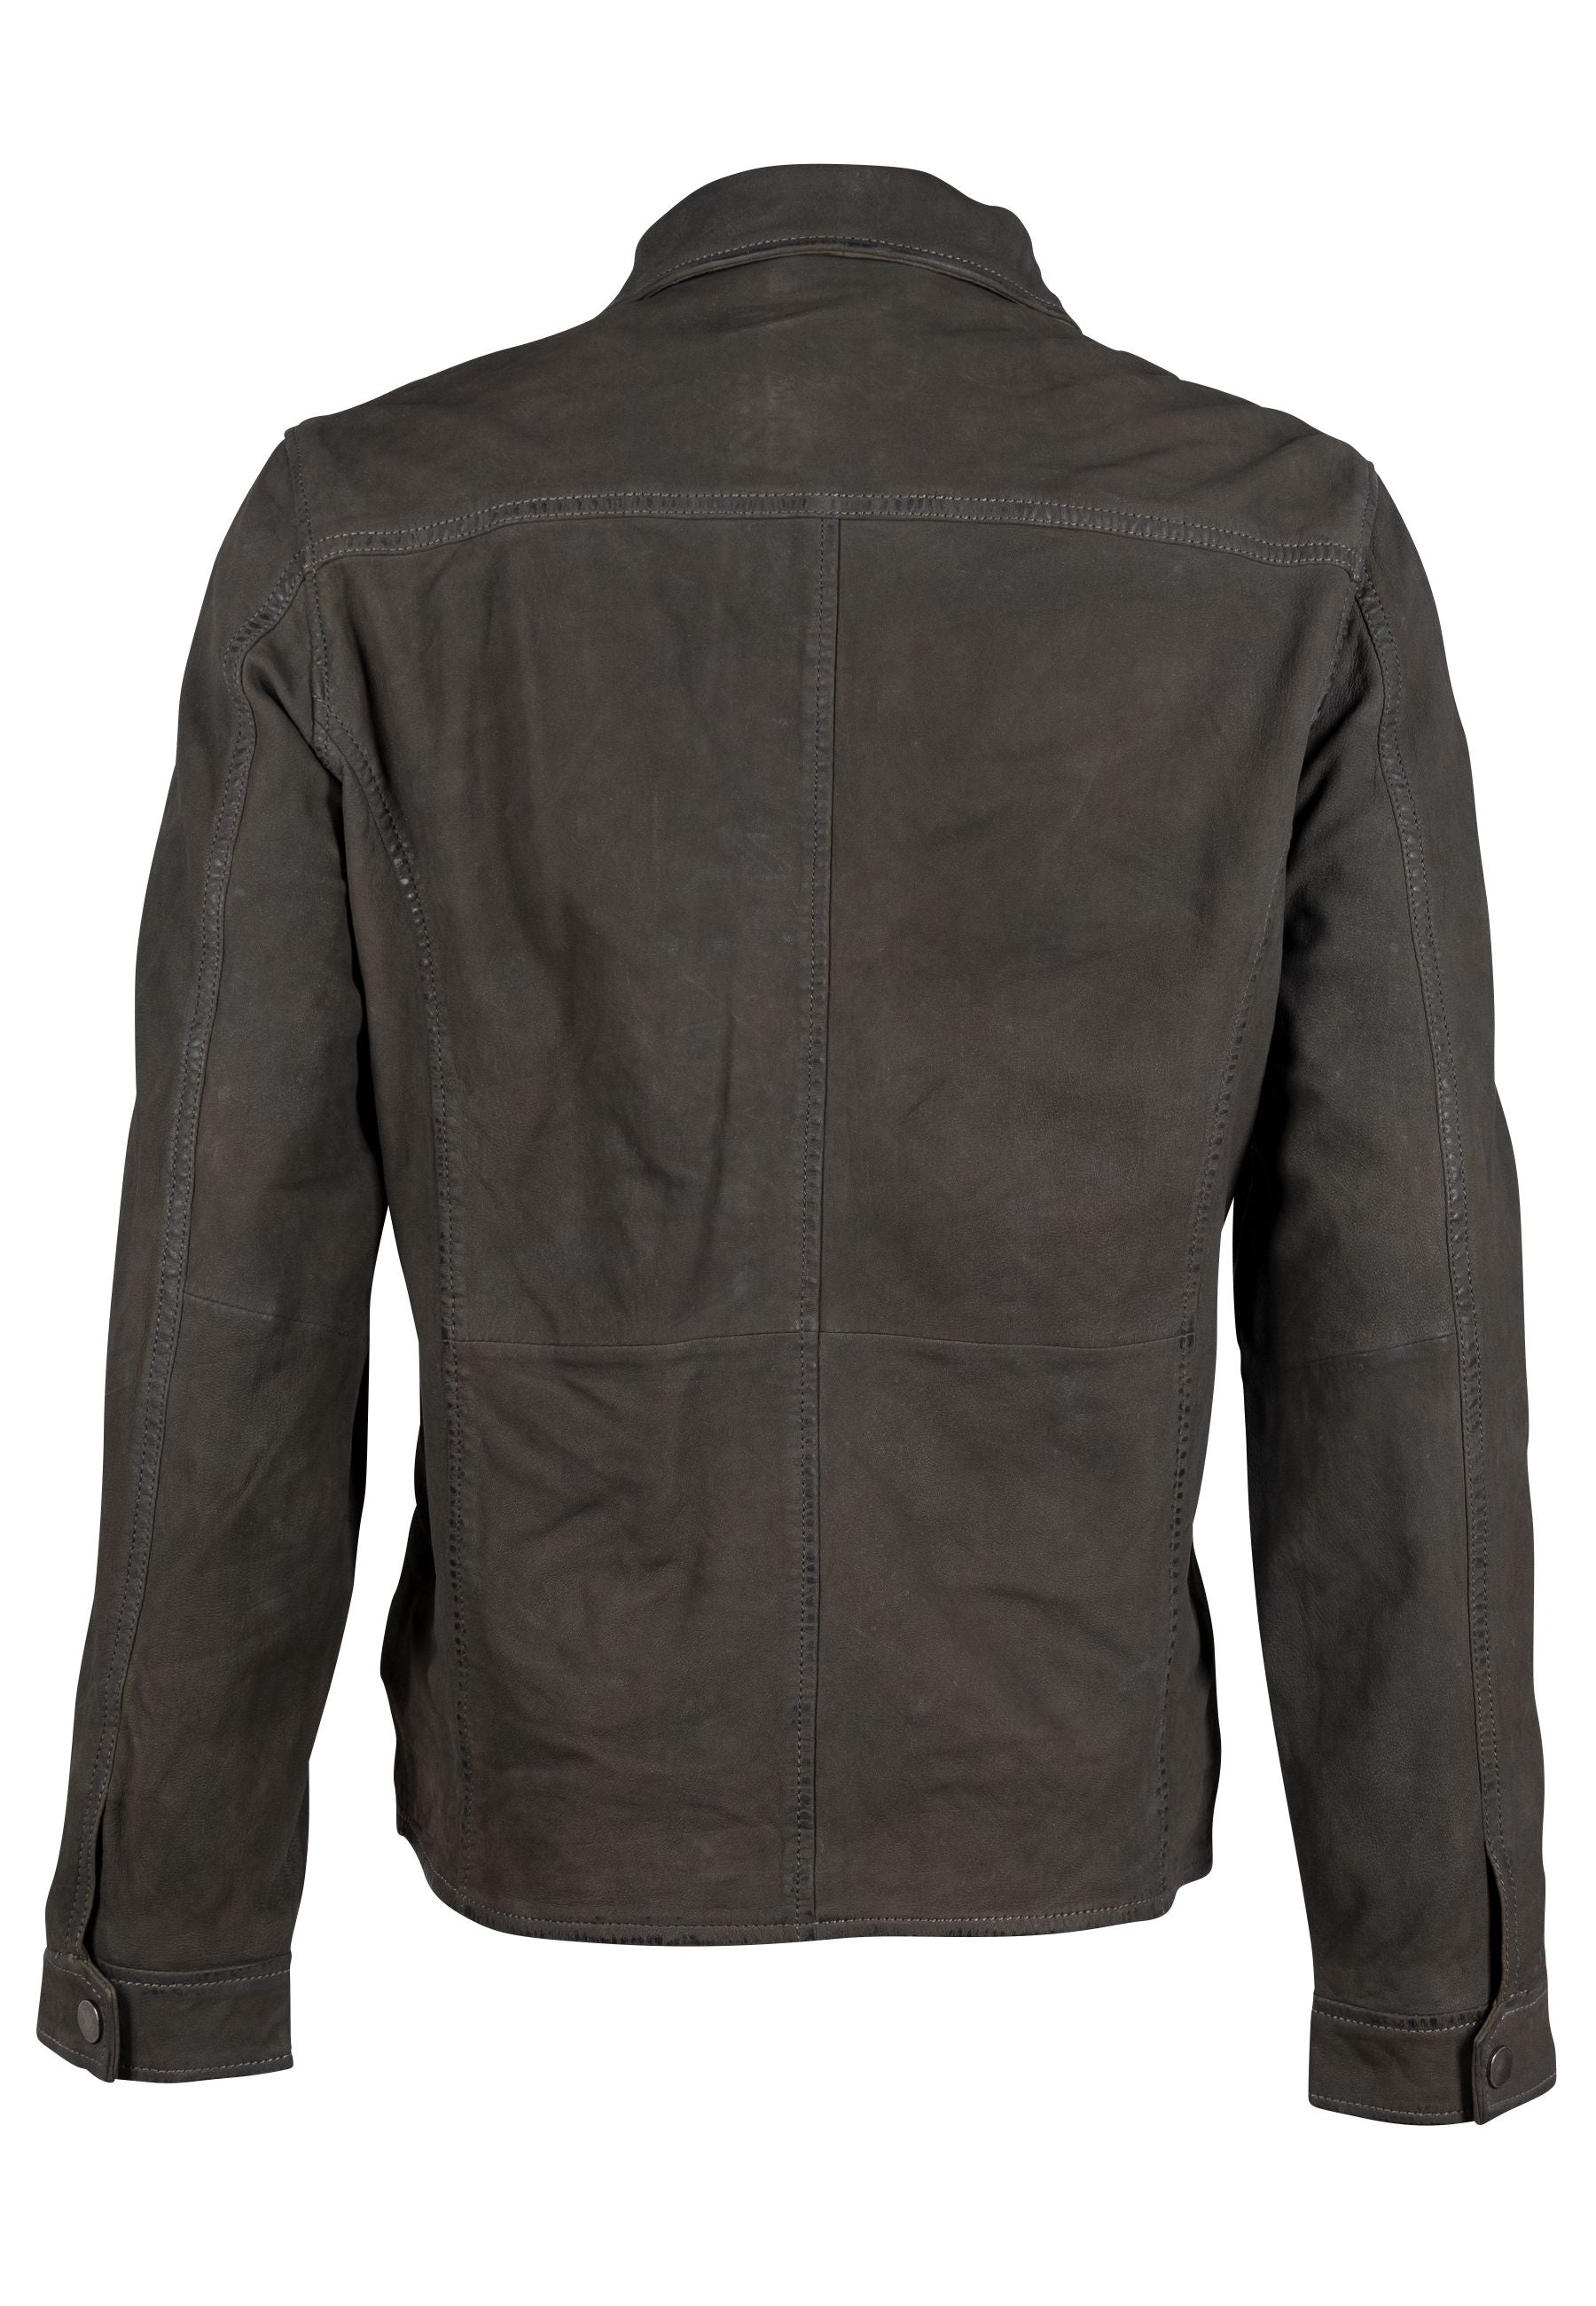 Mauritius Leather, brown leather jacket, soft nubeck lambskin leather jacket, men's leather jacket, spring jacket. Mackinac Island boutique